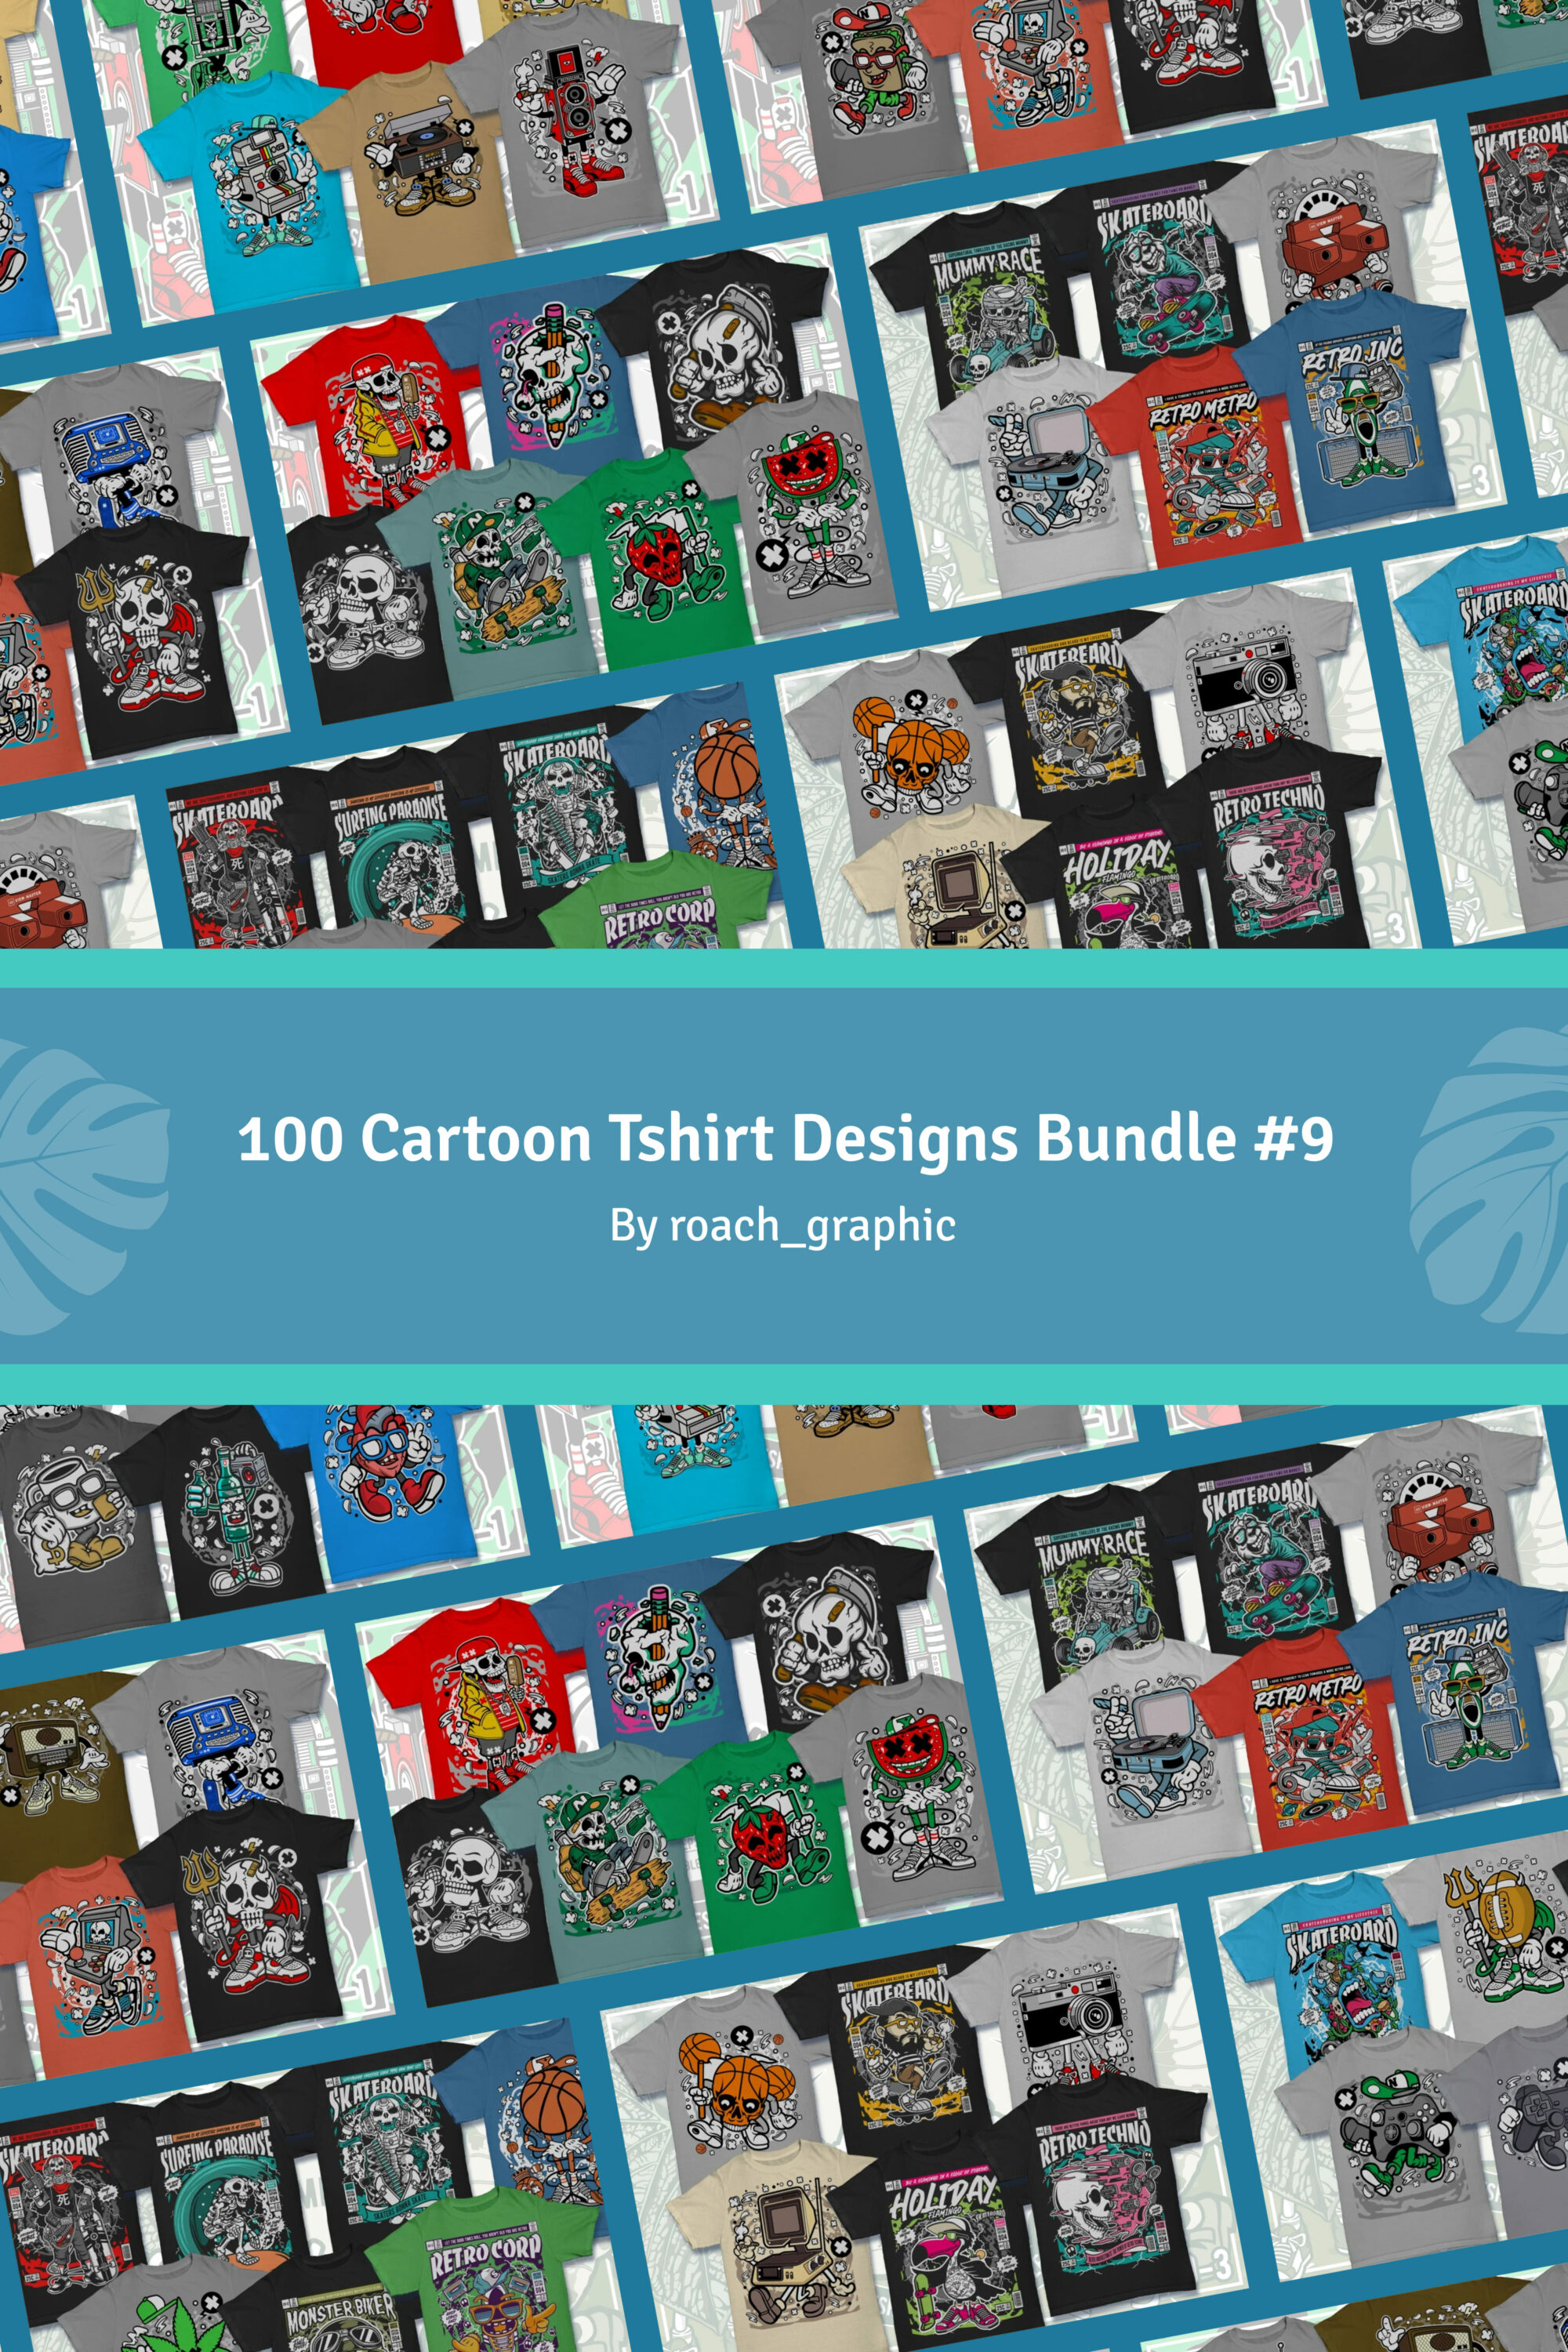 100 Cartoon Tshirt Designs Bundle #9 pinterest image.